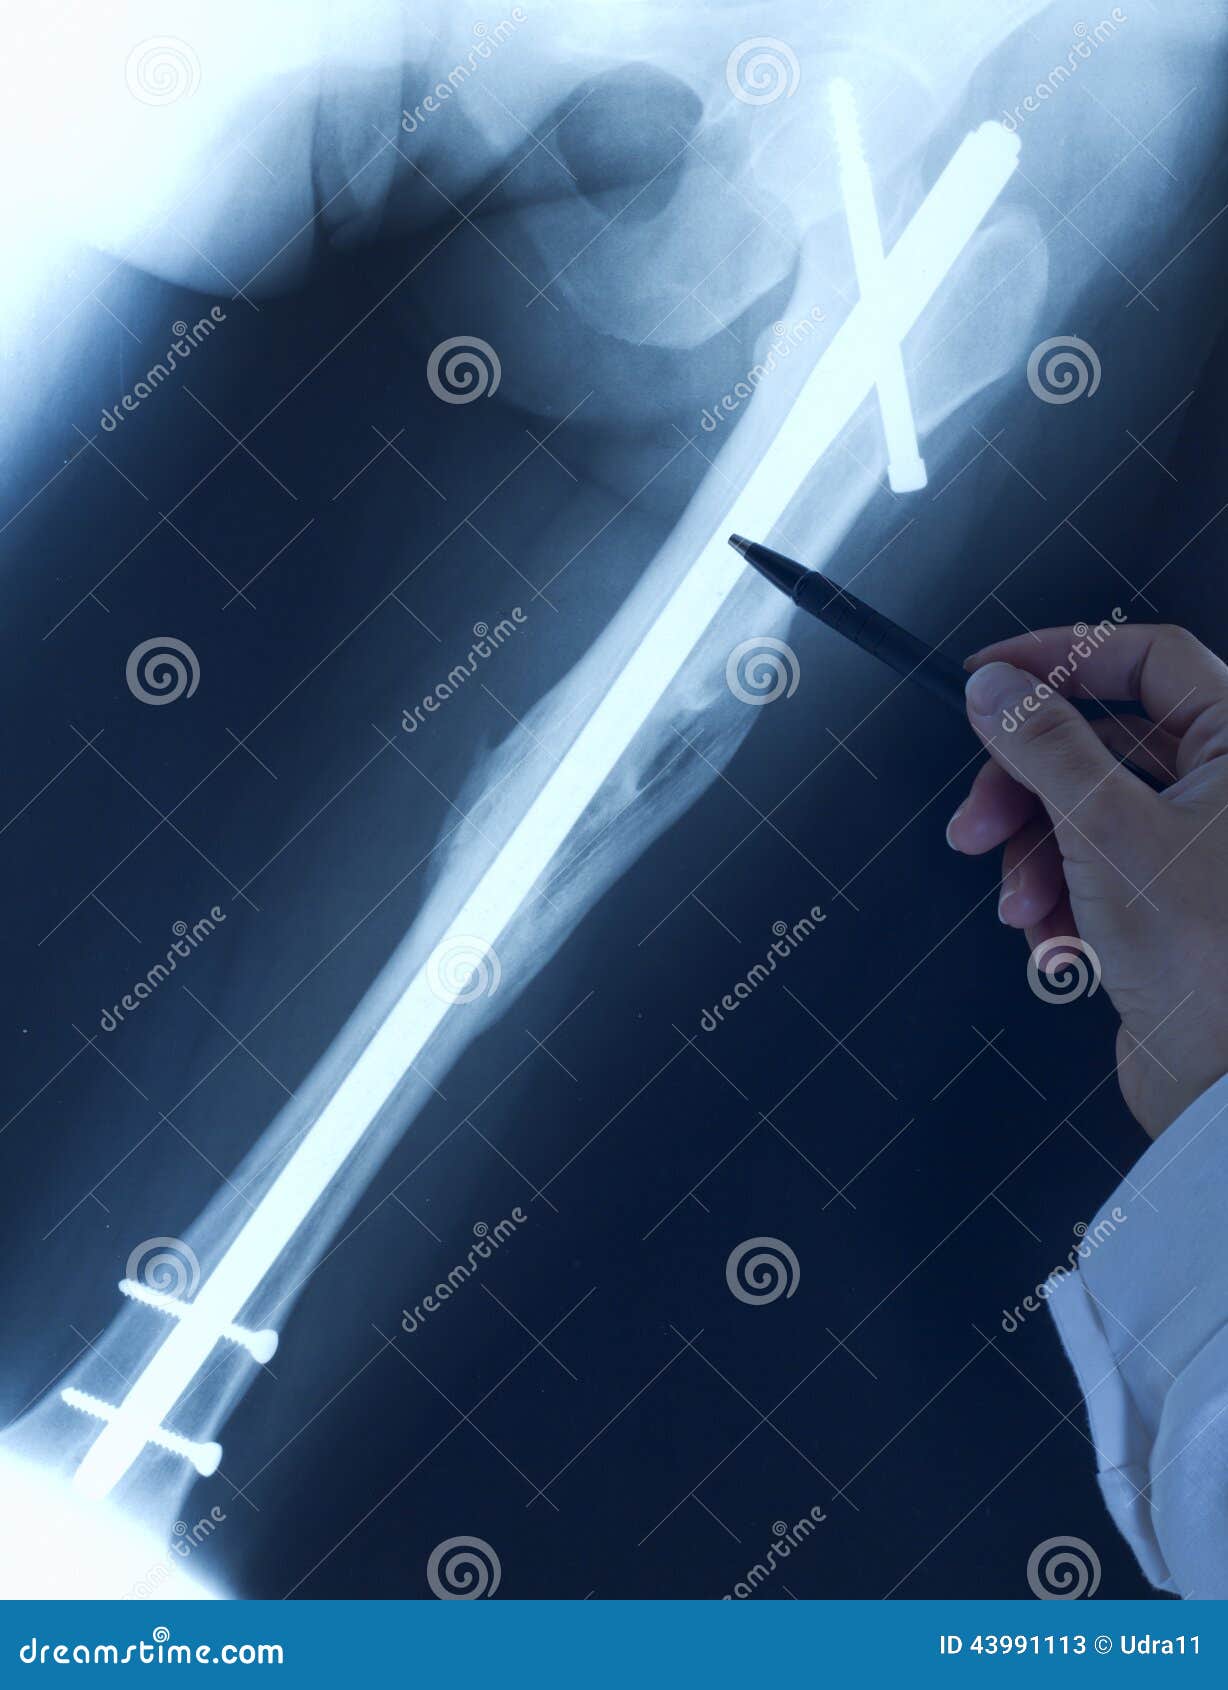 doctor orthopedist examine x-ray